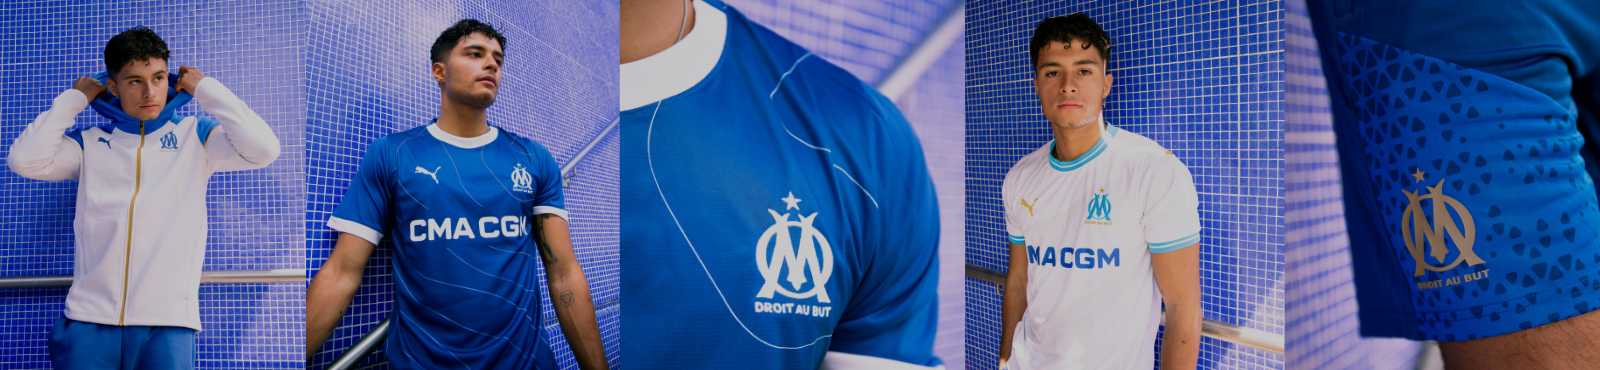 Maillot OM - Collection officielle Olympique de Marseille - Homme OM